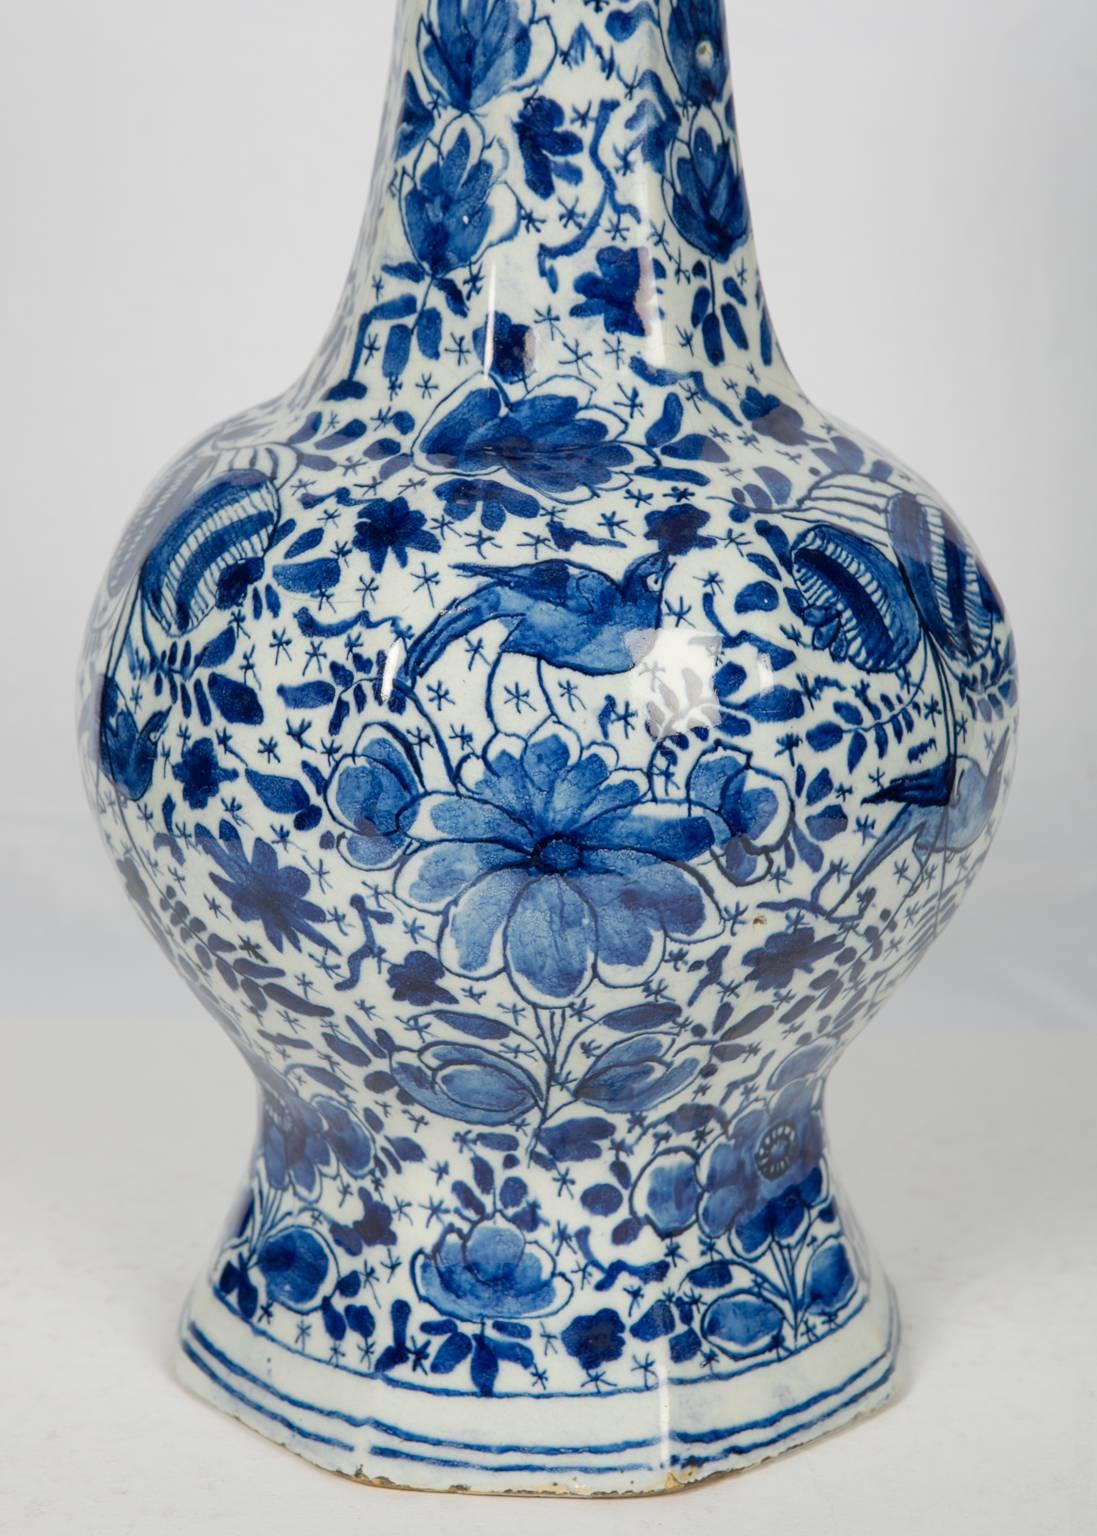 Rococo Antique Blue and White Delft Bottle Vase Large